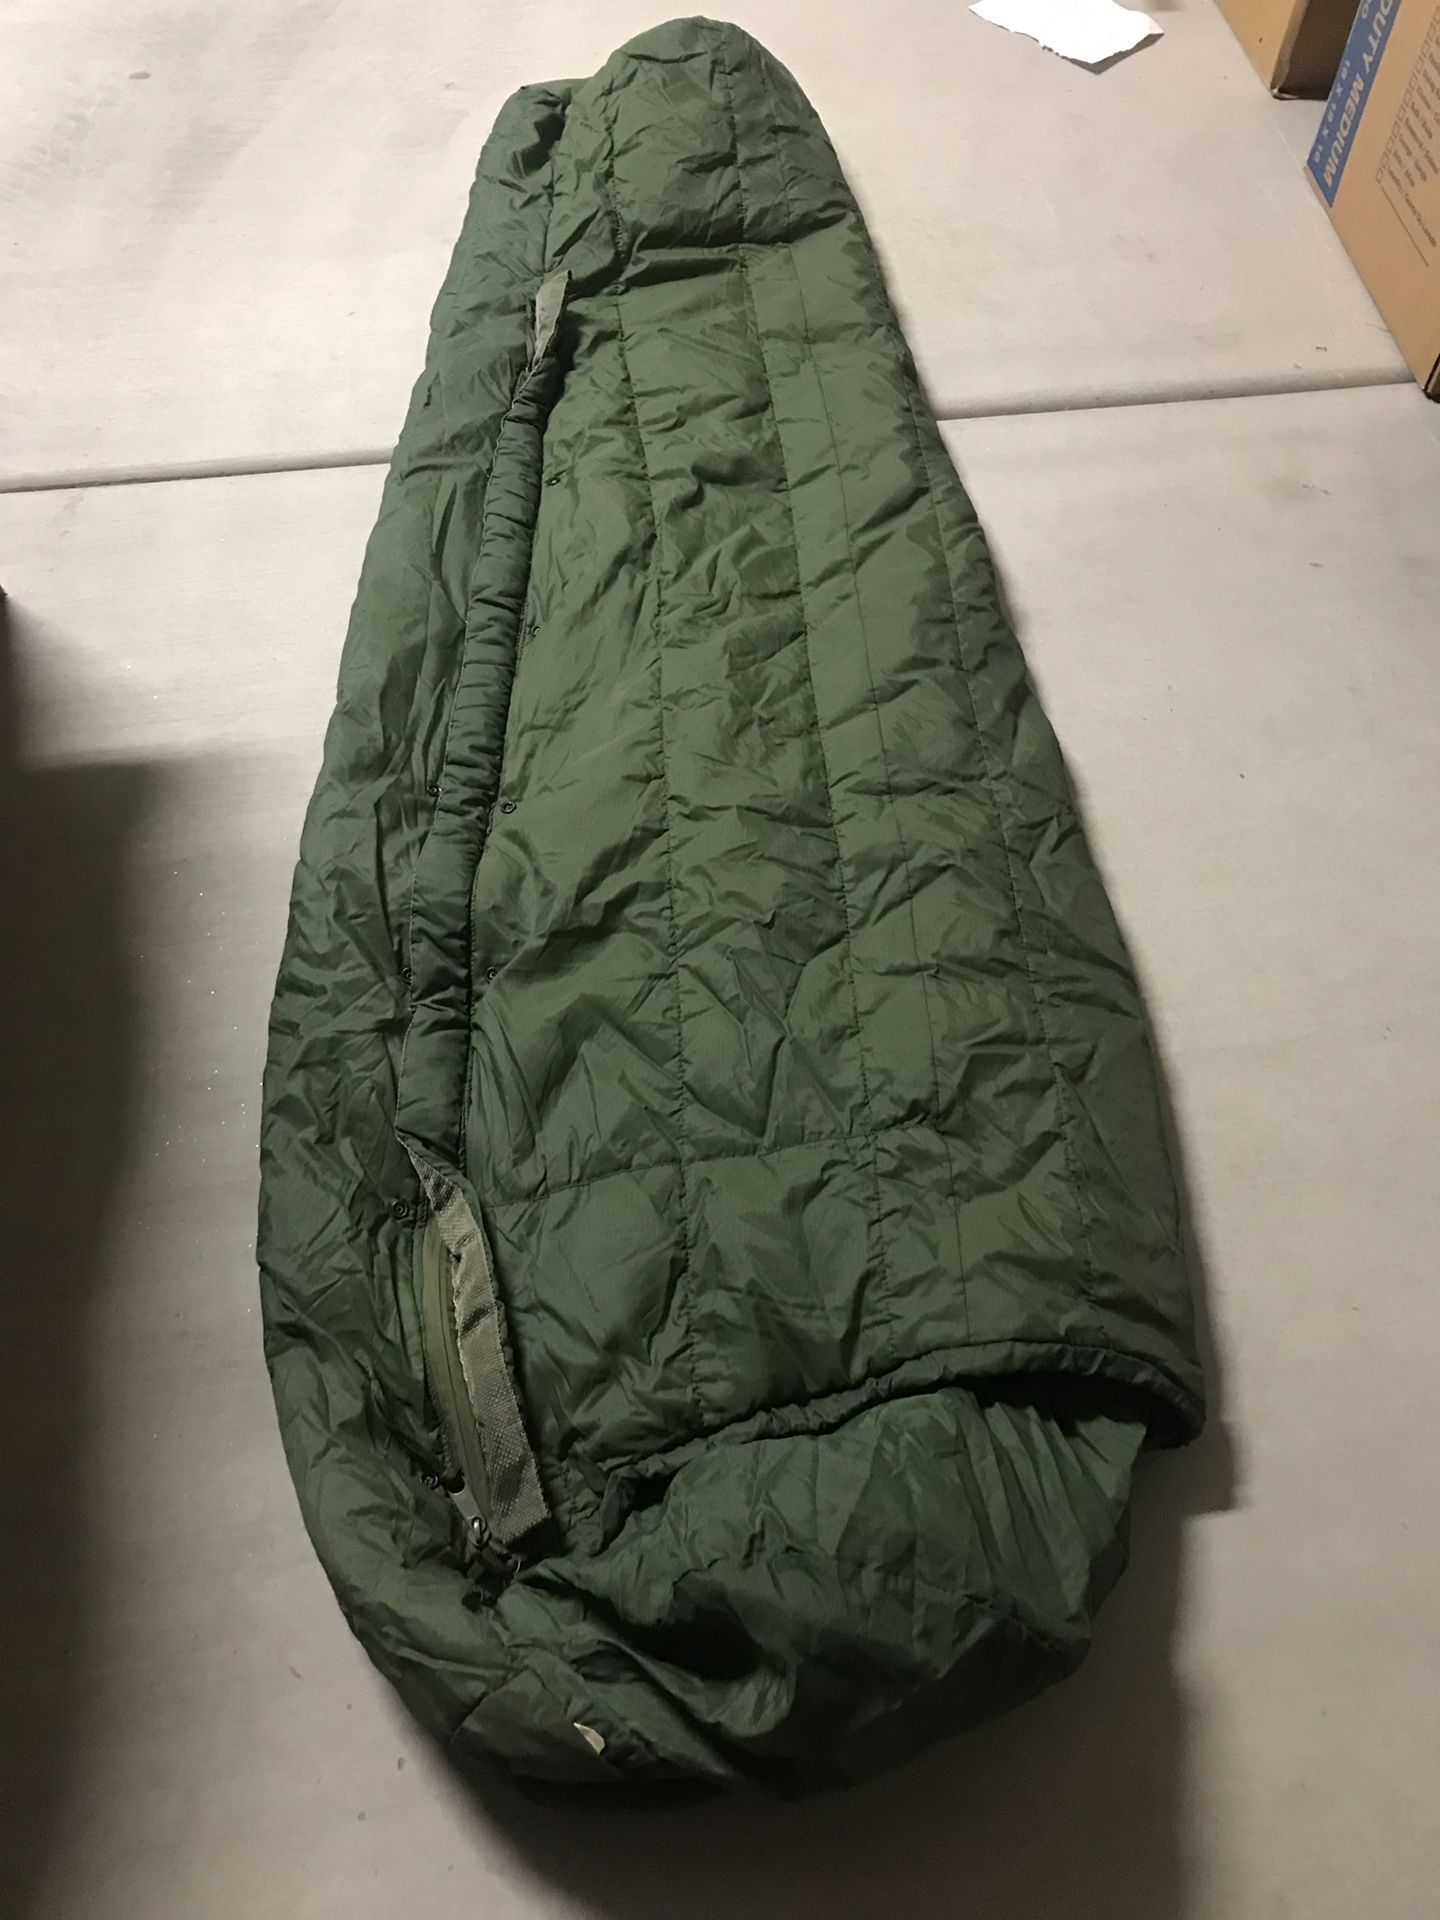 Military Grade Sleeping Bag